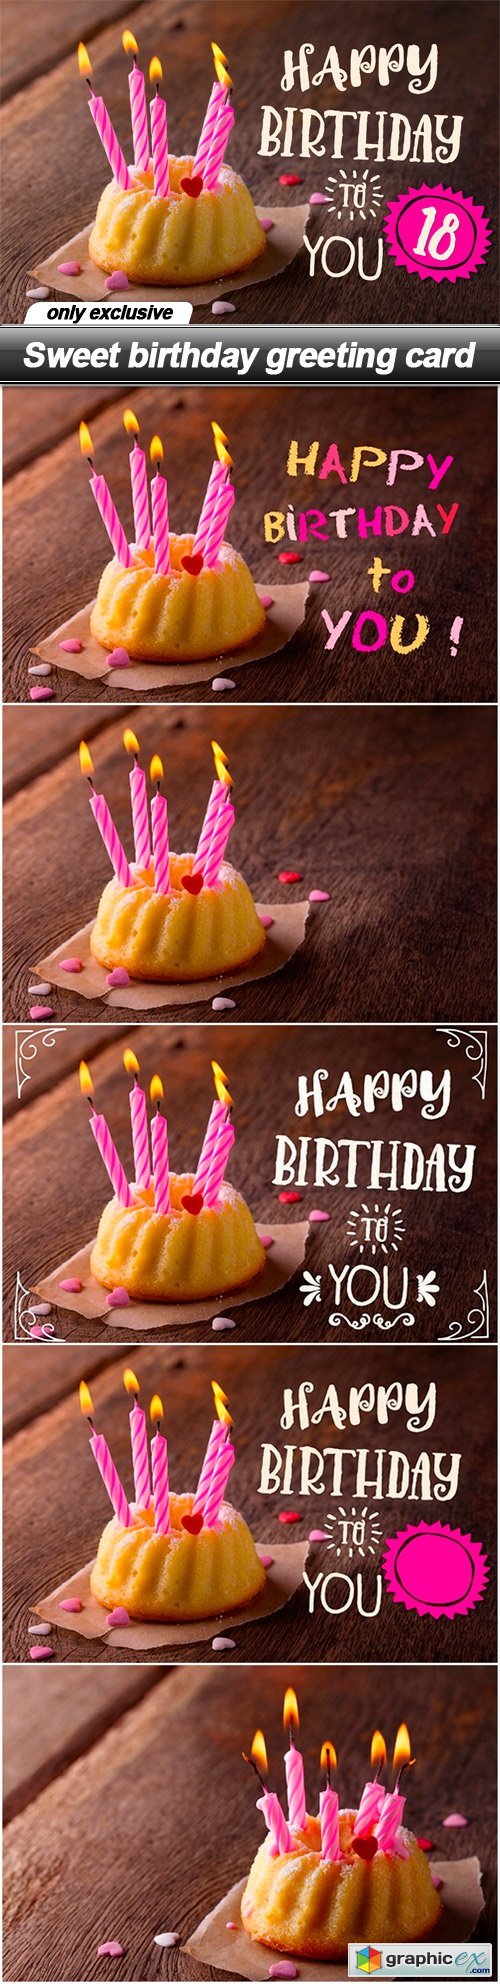 Sweet birthday greeting card - 6 UHQ JPEG